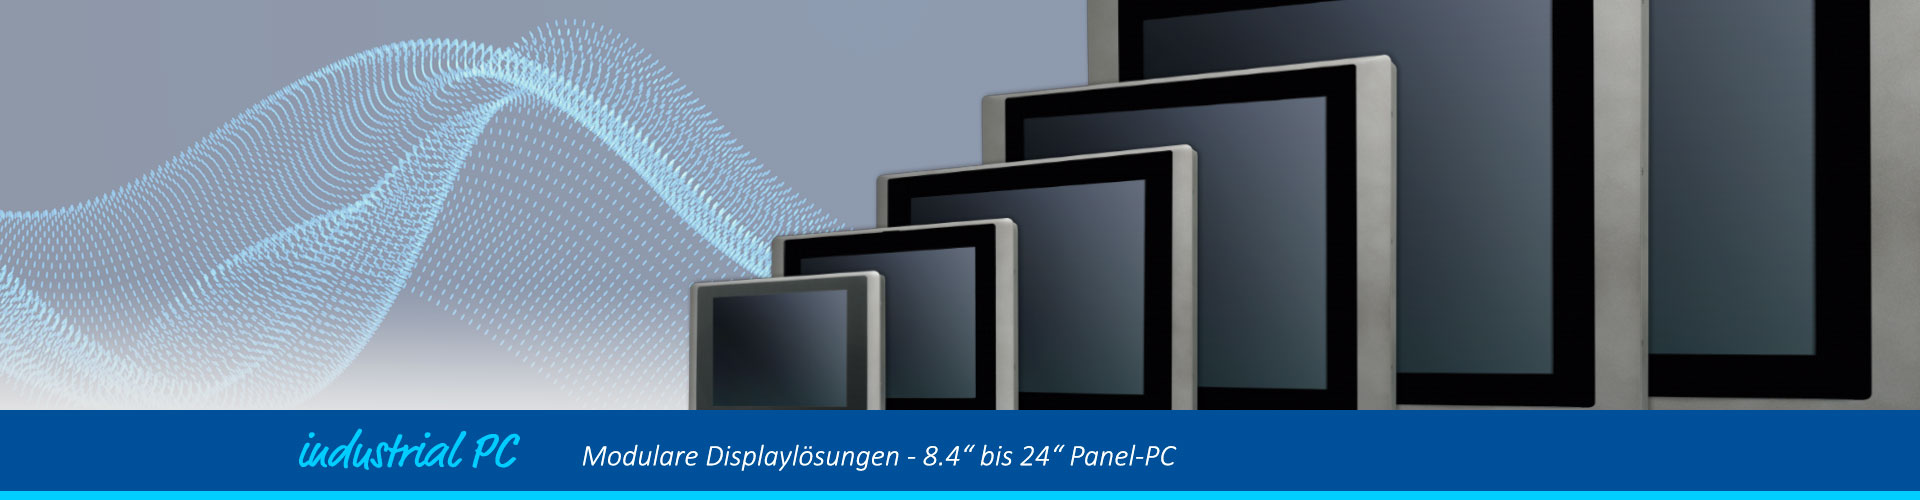 8 bis 24 Zoll Panel-PC